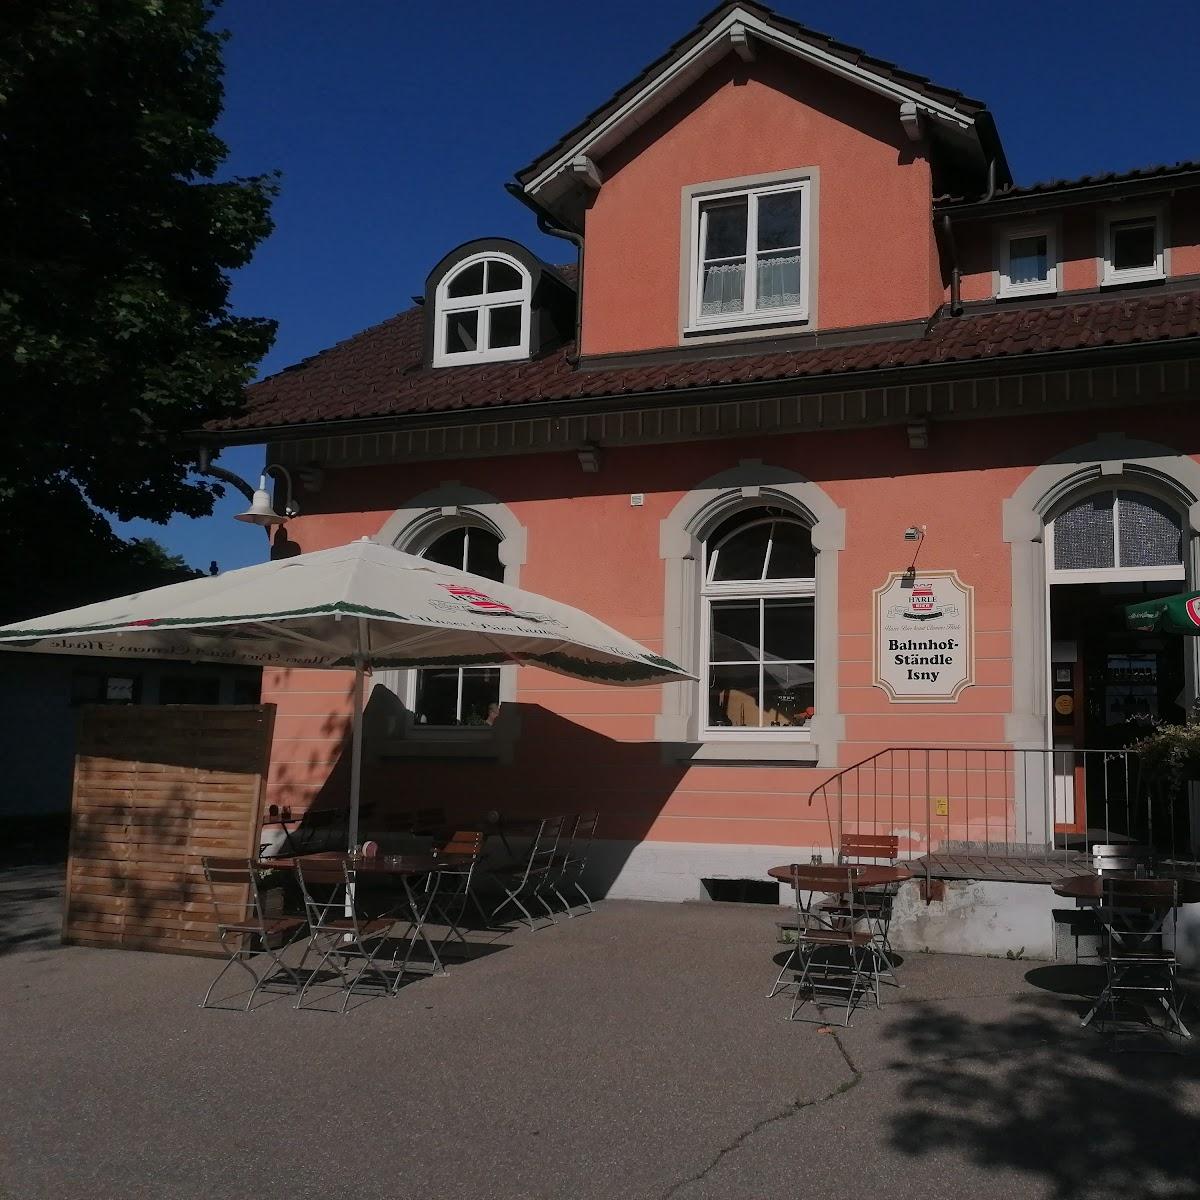 Restaurant "Bahnhof Ständle" in Isny im Allgäu